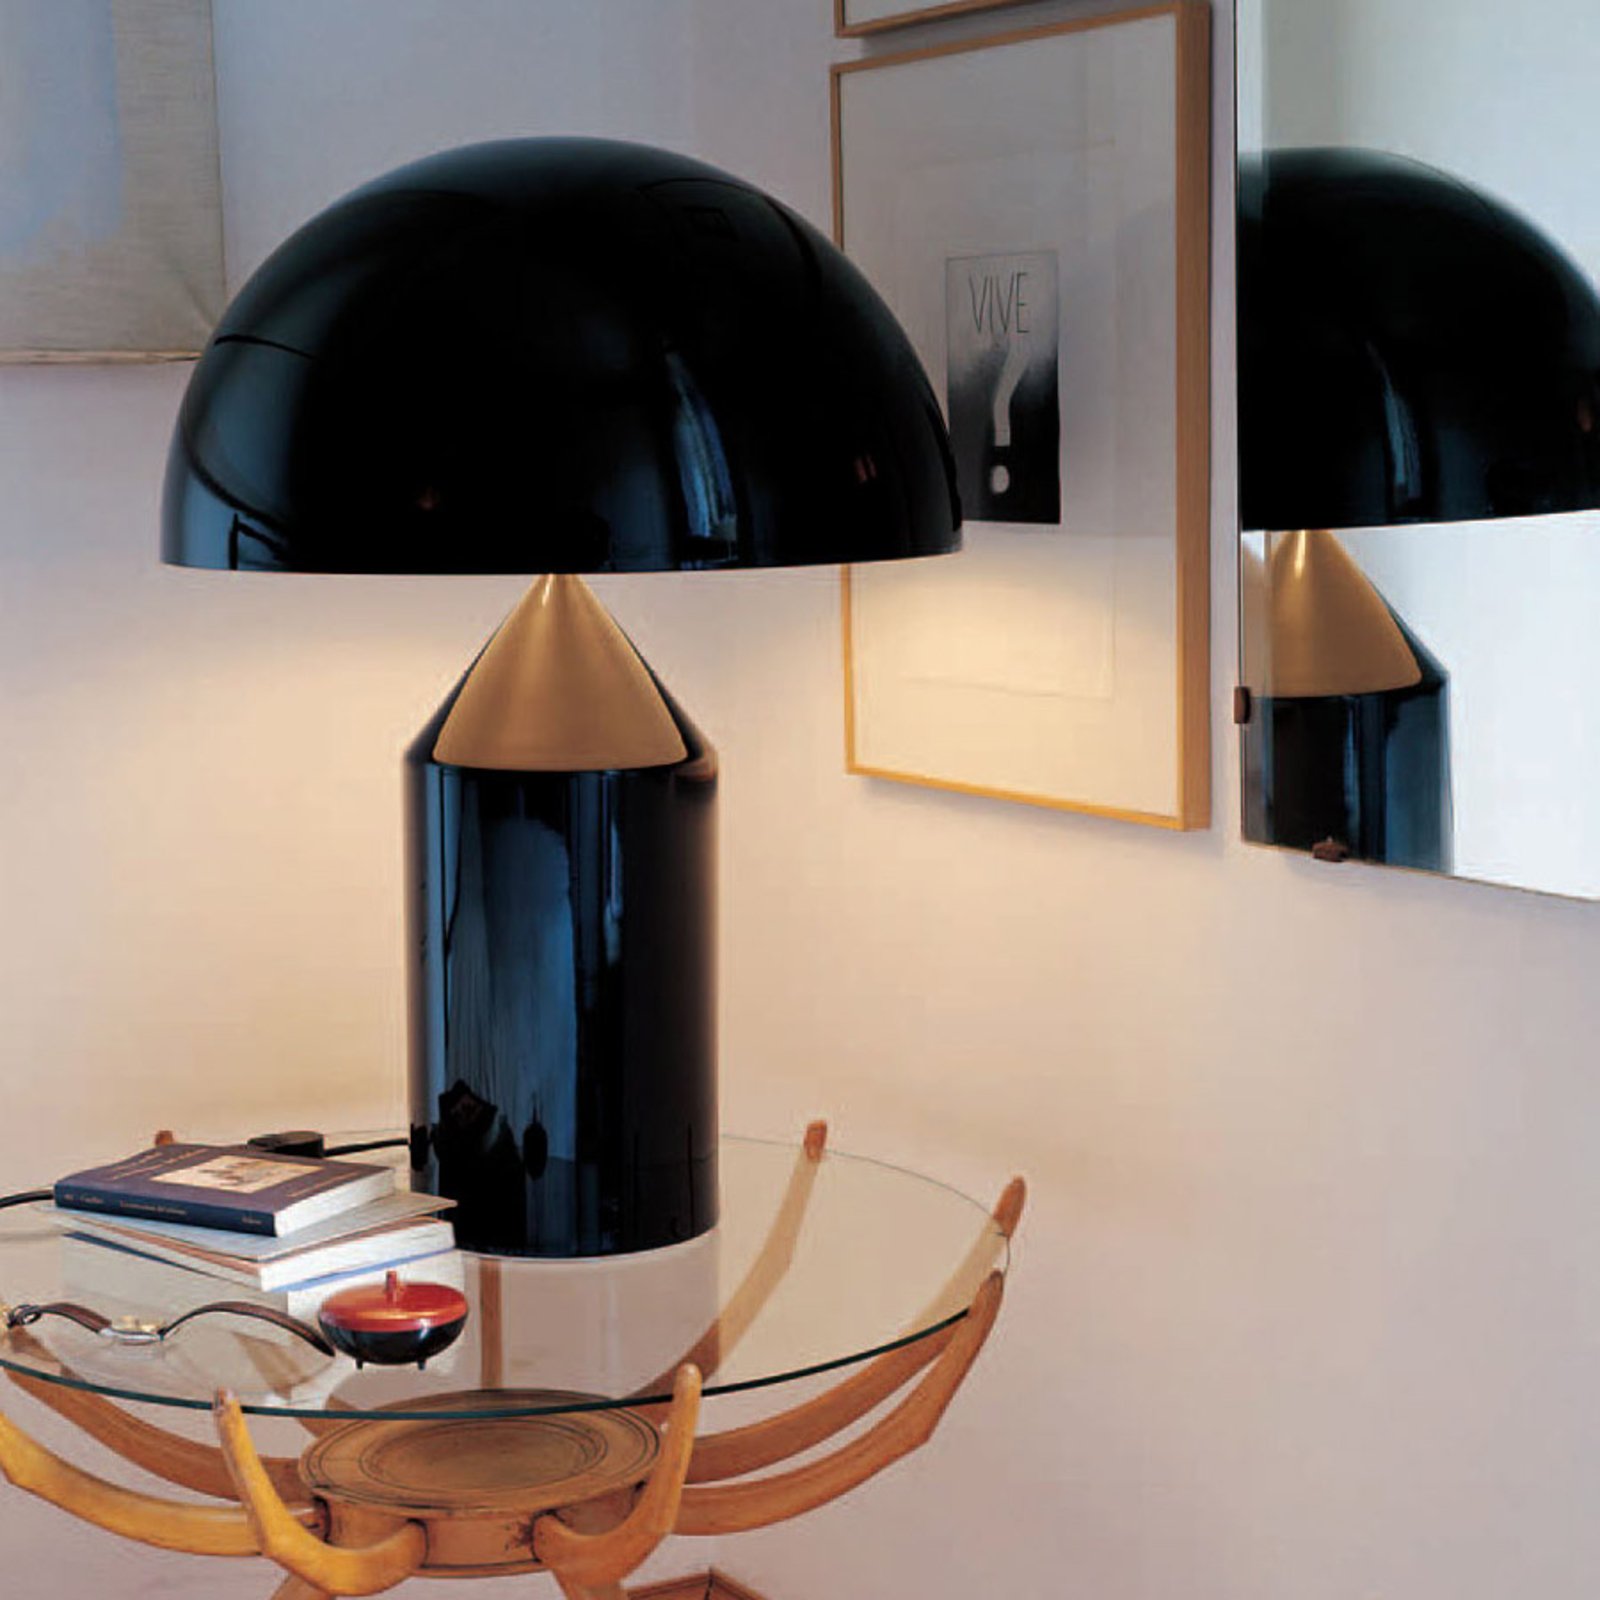 Oluce Atollo tafellamp met dimmer Ø50cm zwart